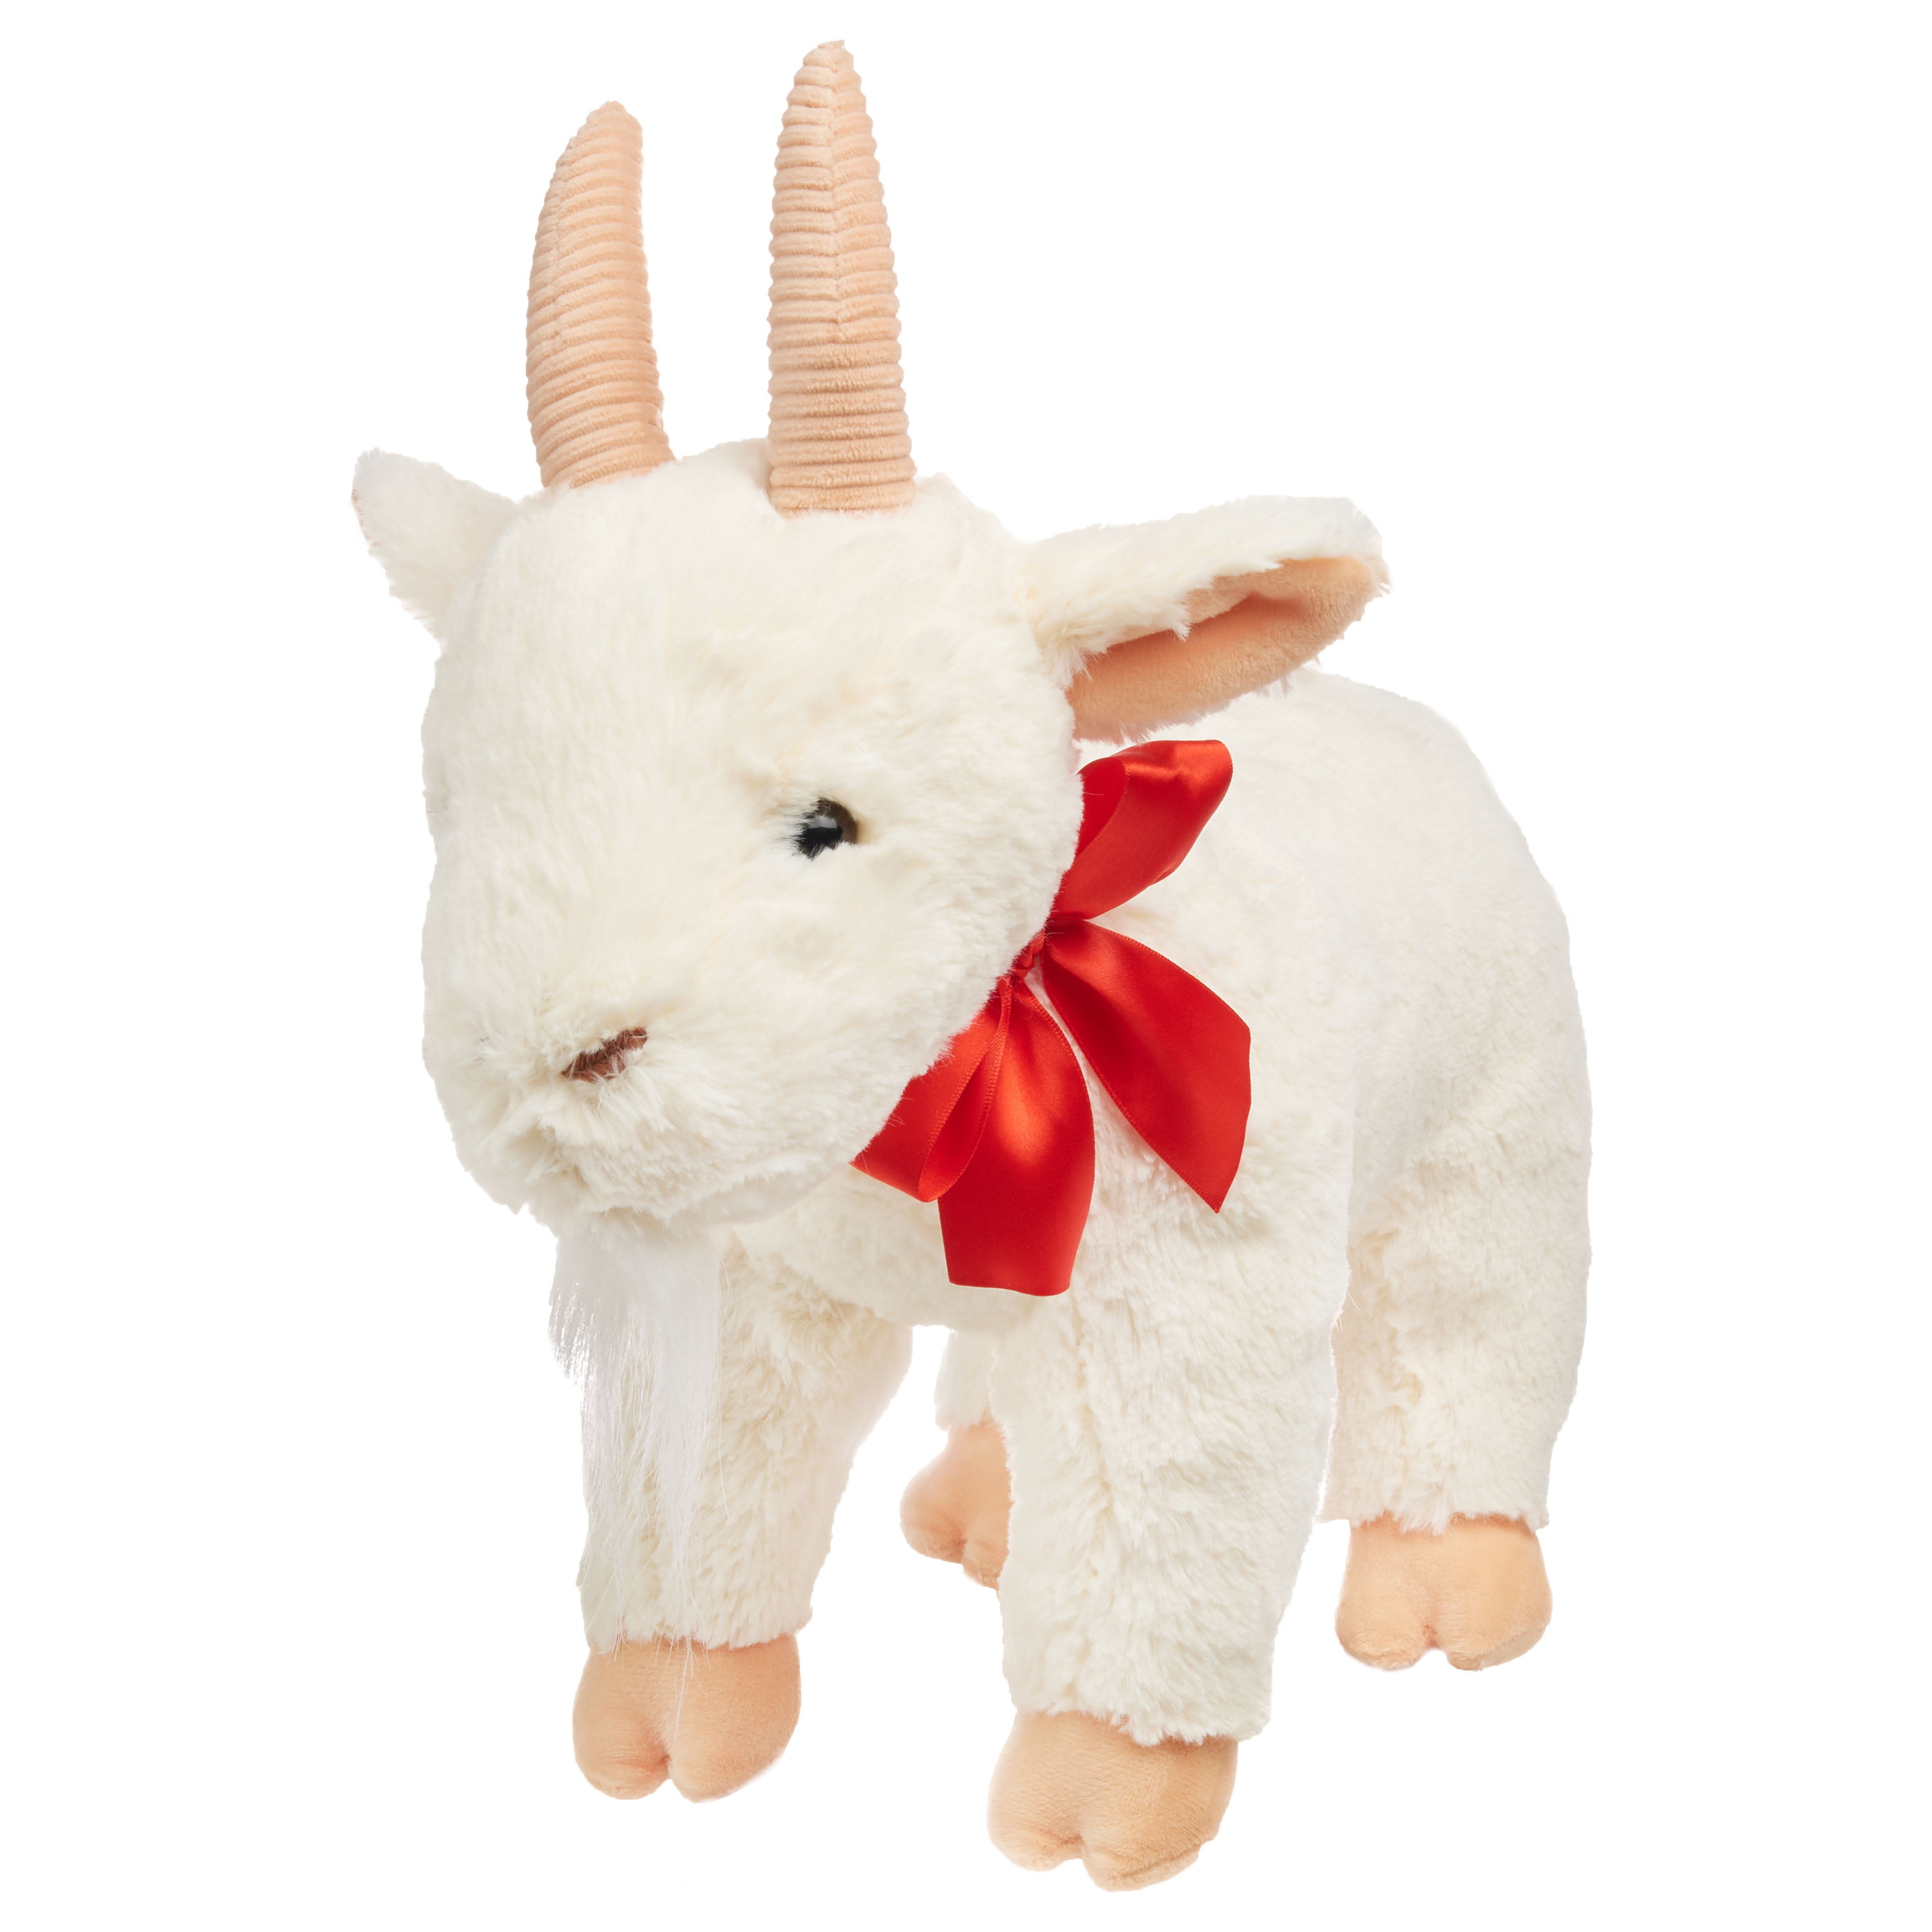 goat stuffed animal walmart